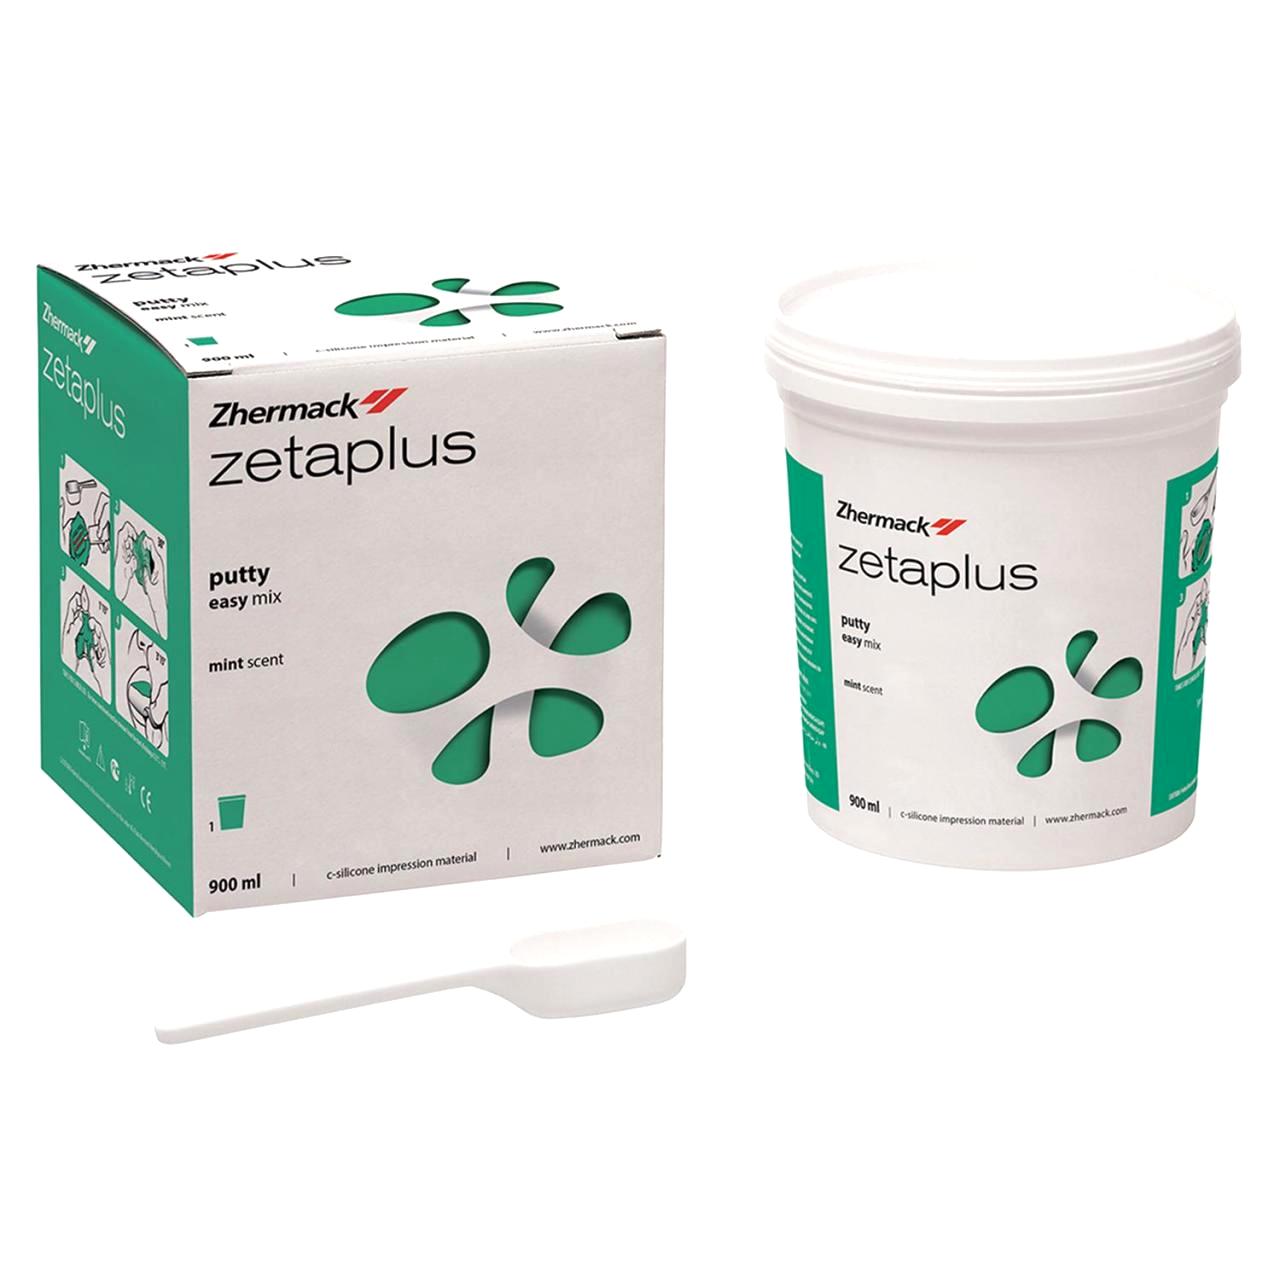 Zhermack Zetaplus Putty Easy mix ( 900ml )Dental Impression Material